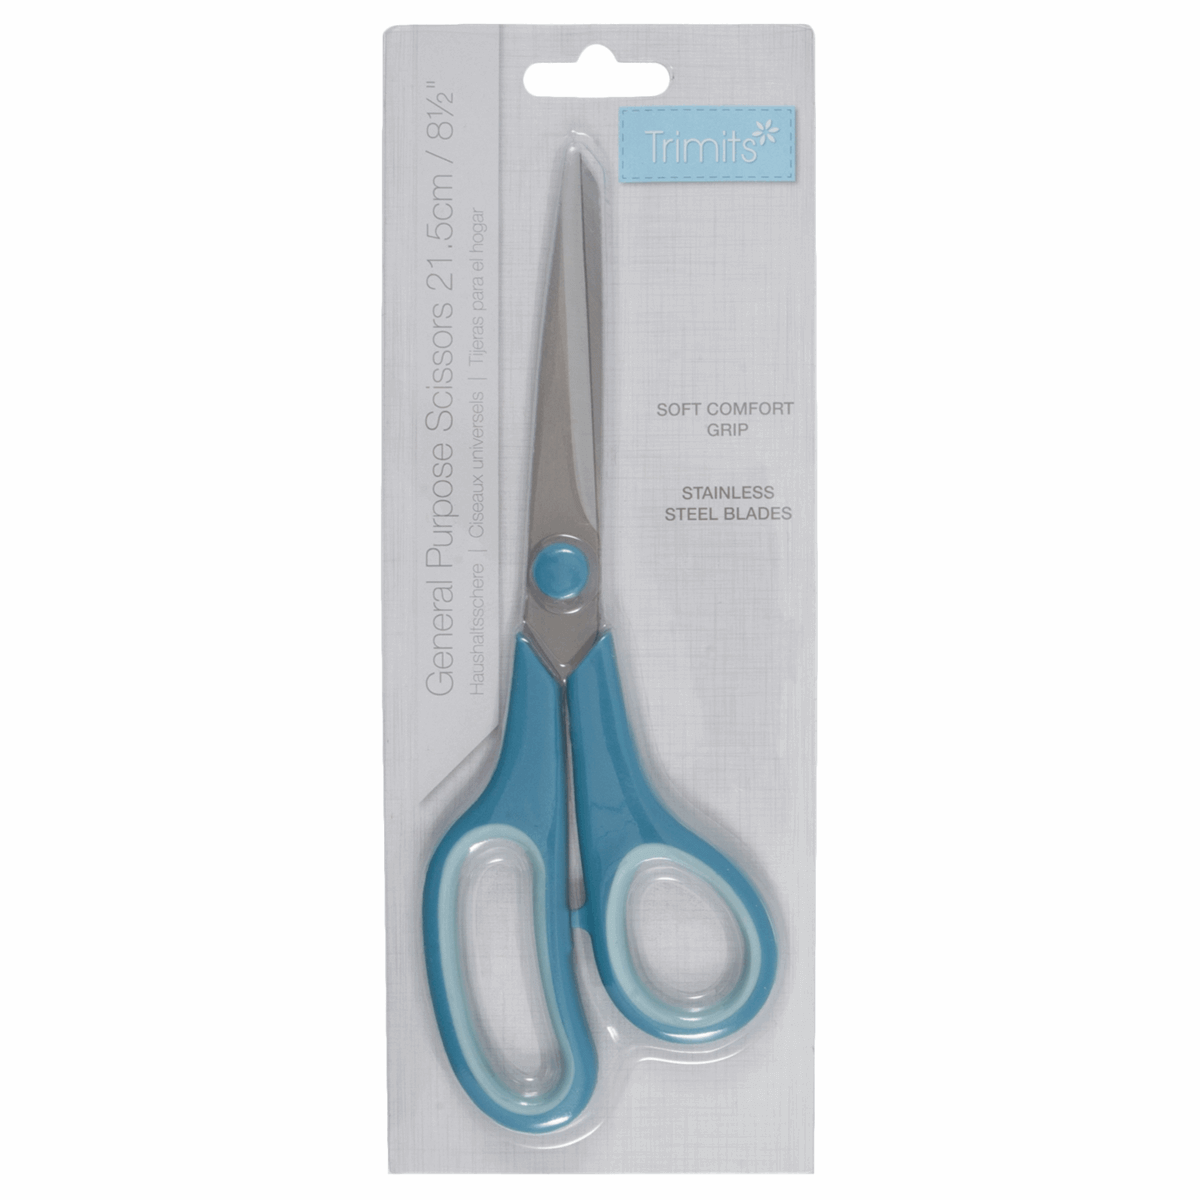 General Purpose Scissors: stainless steel blades, soft comfort grip. 21.5 cm/8.5" Trimits